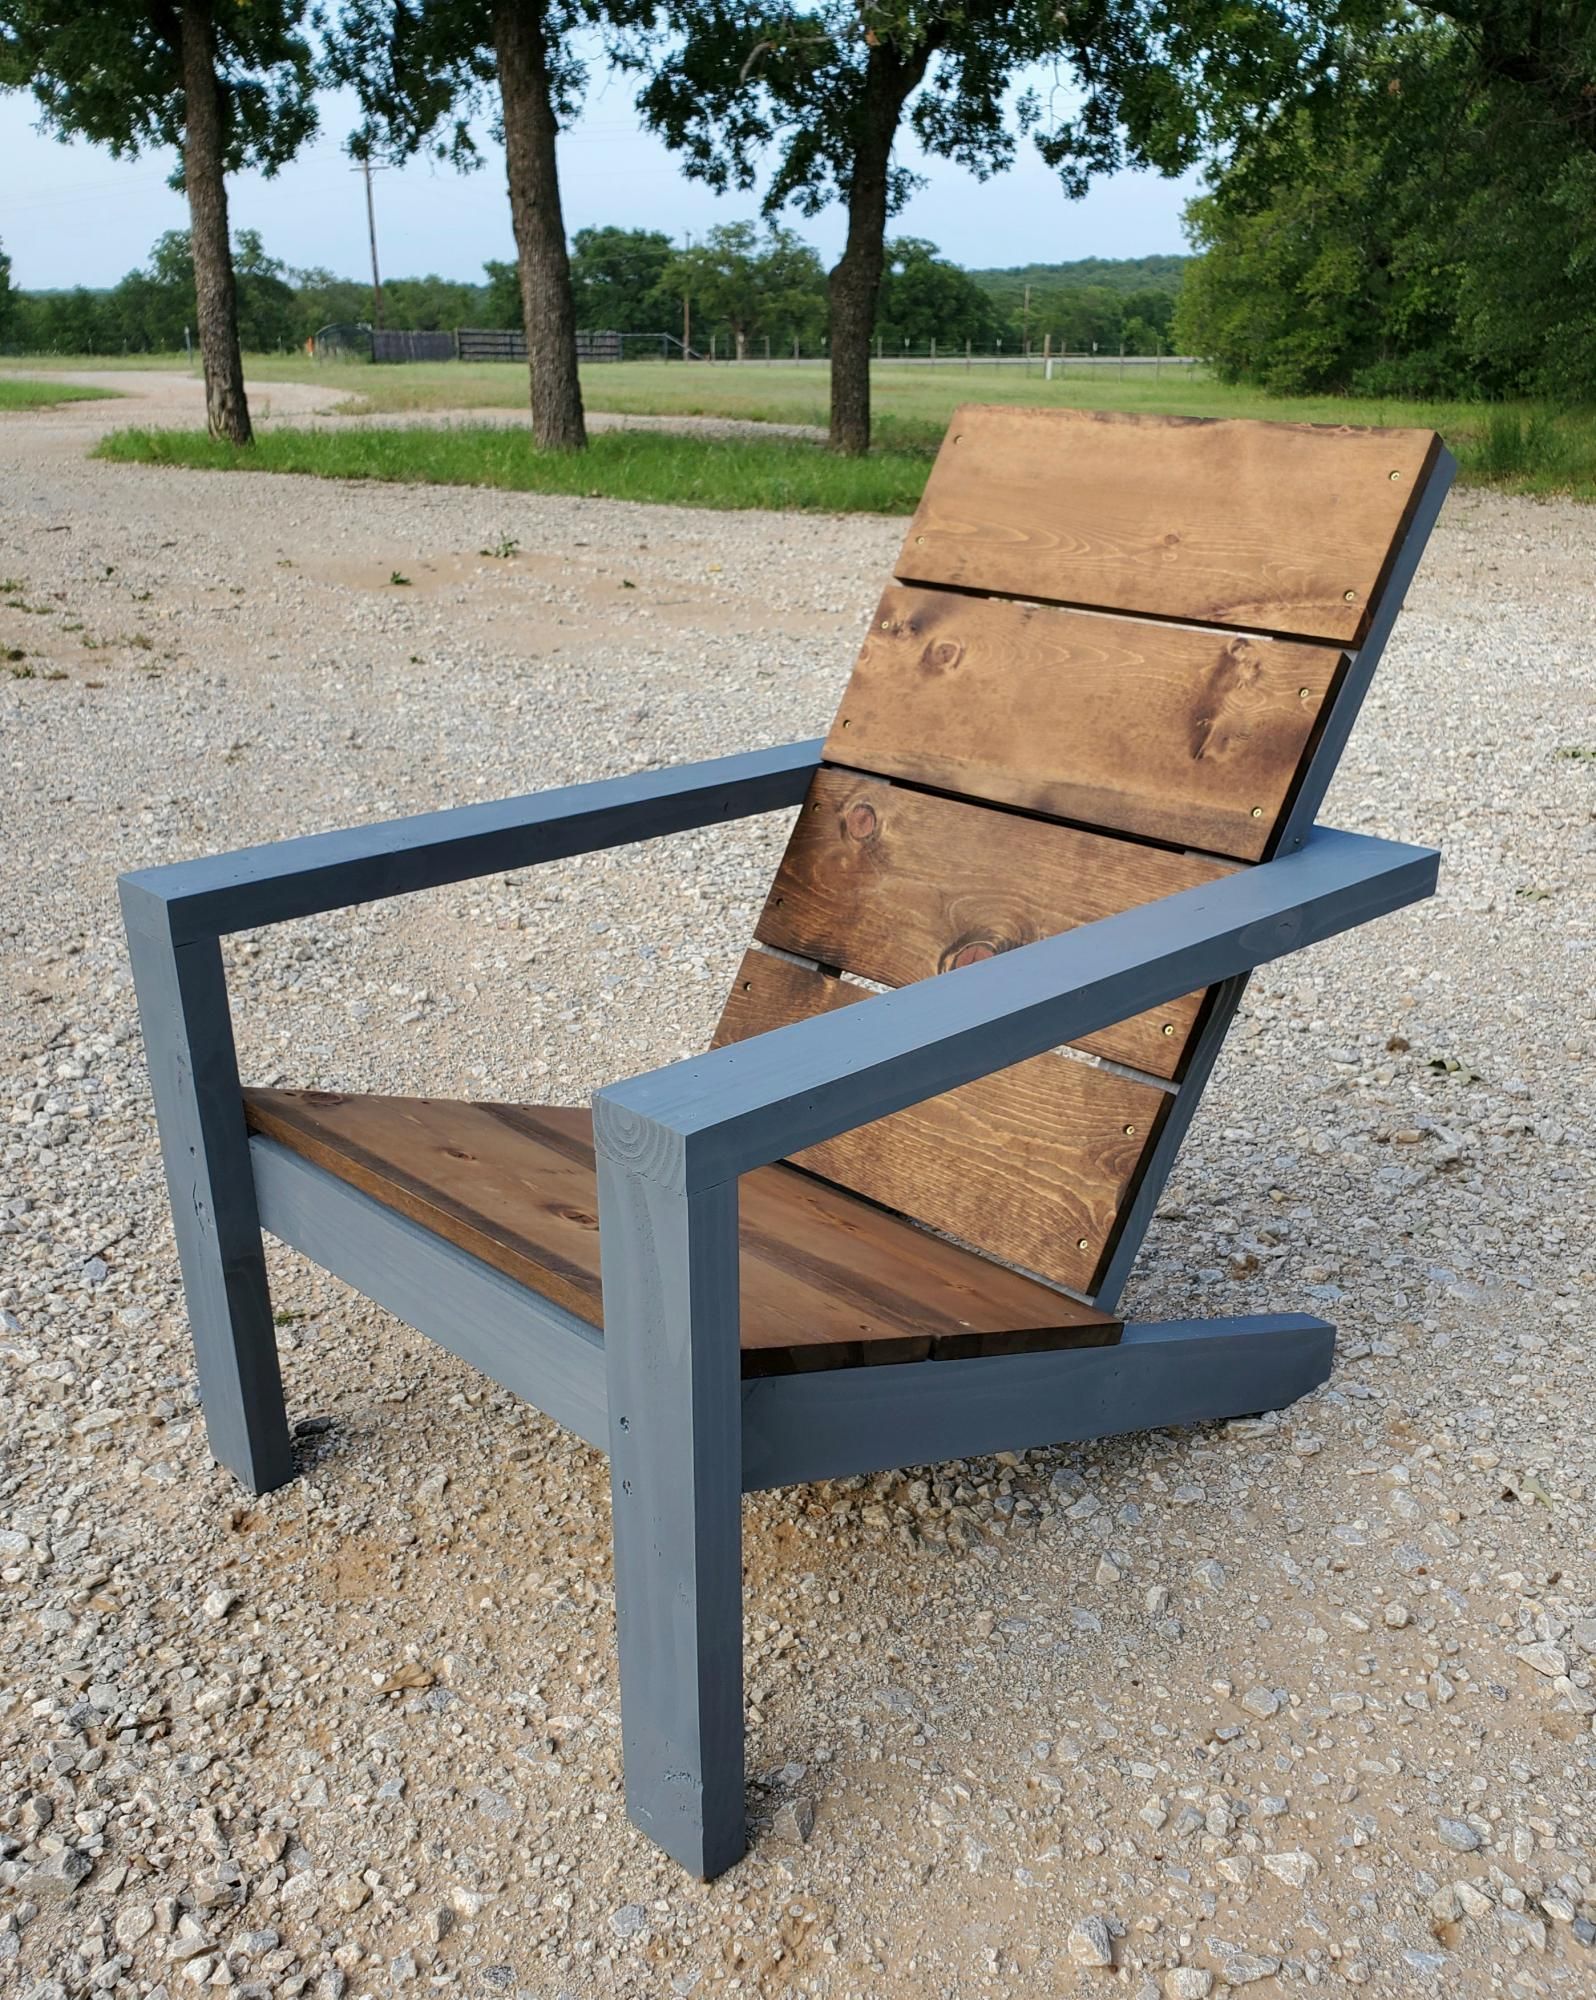 Building a Deck Chair